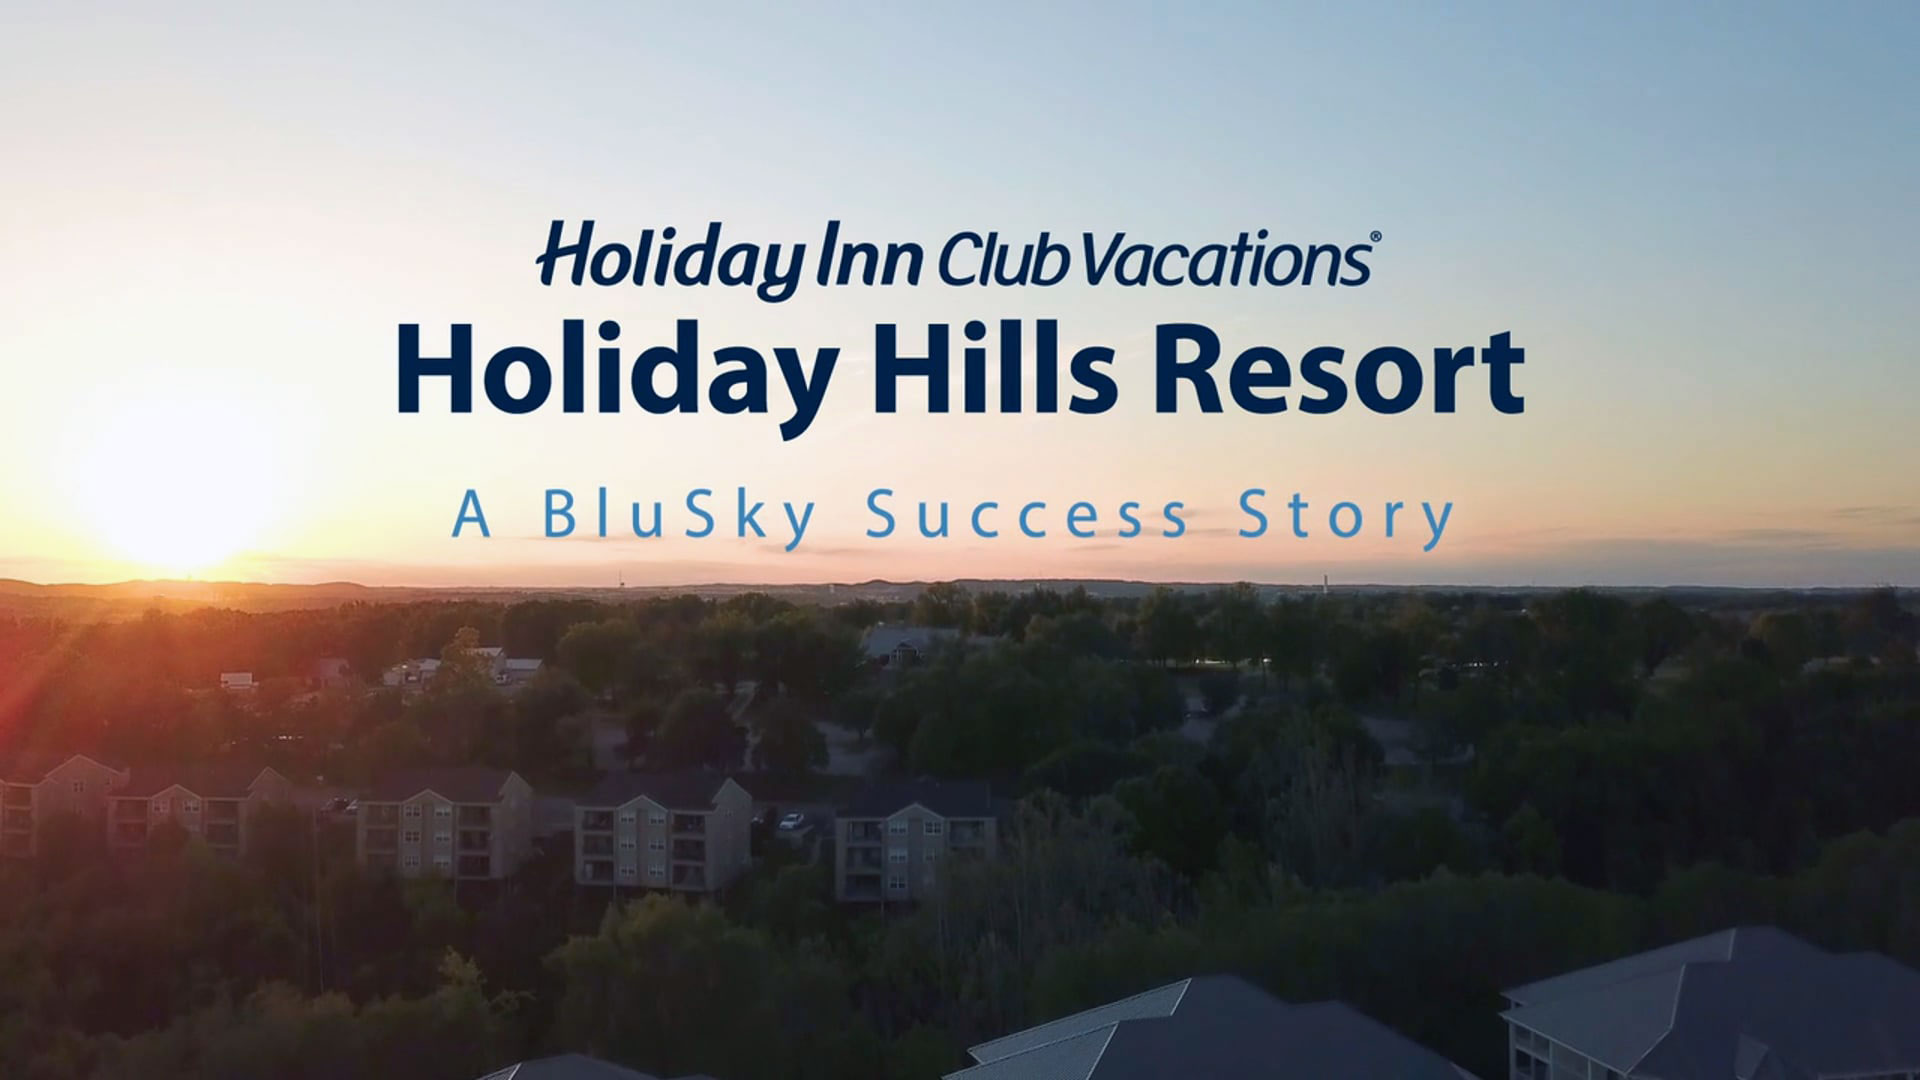 BluSky Holiday Hills Resort Success Story